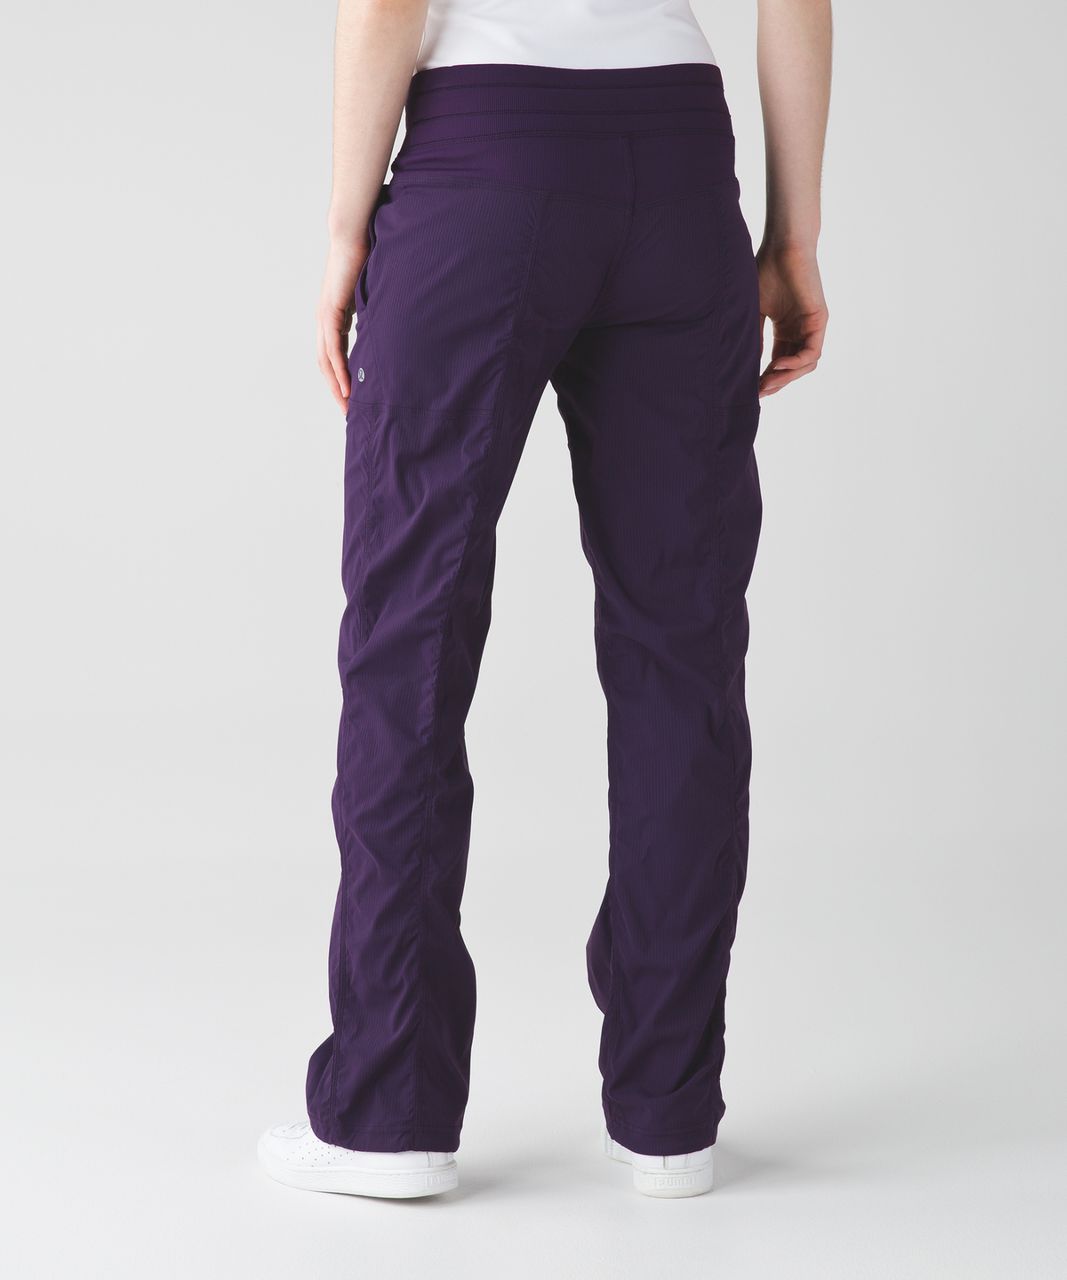 Lululemon dance studio pants purple size 4 unlined